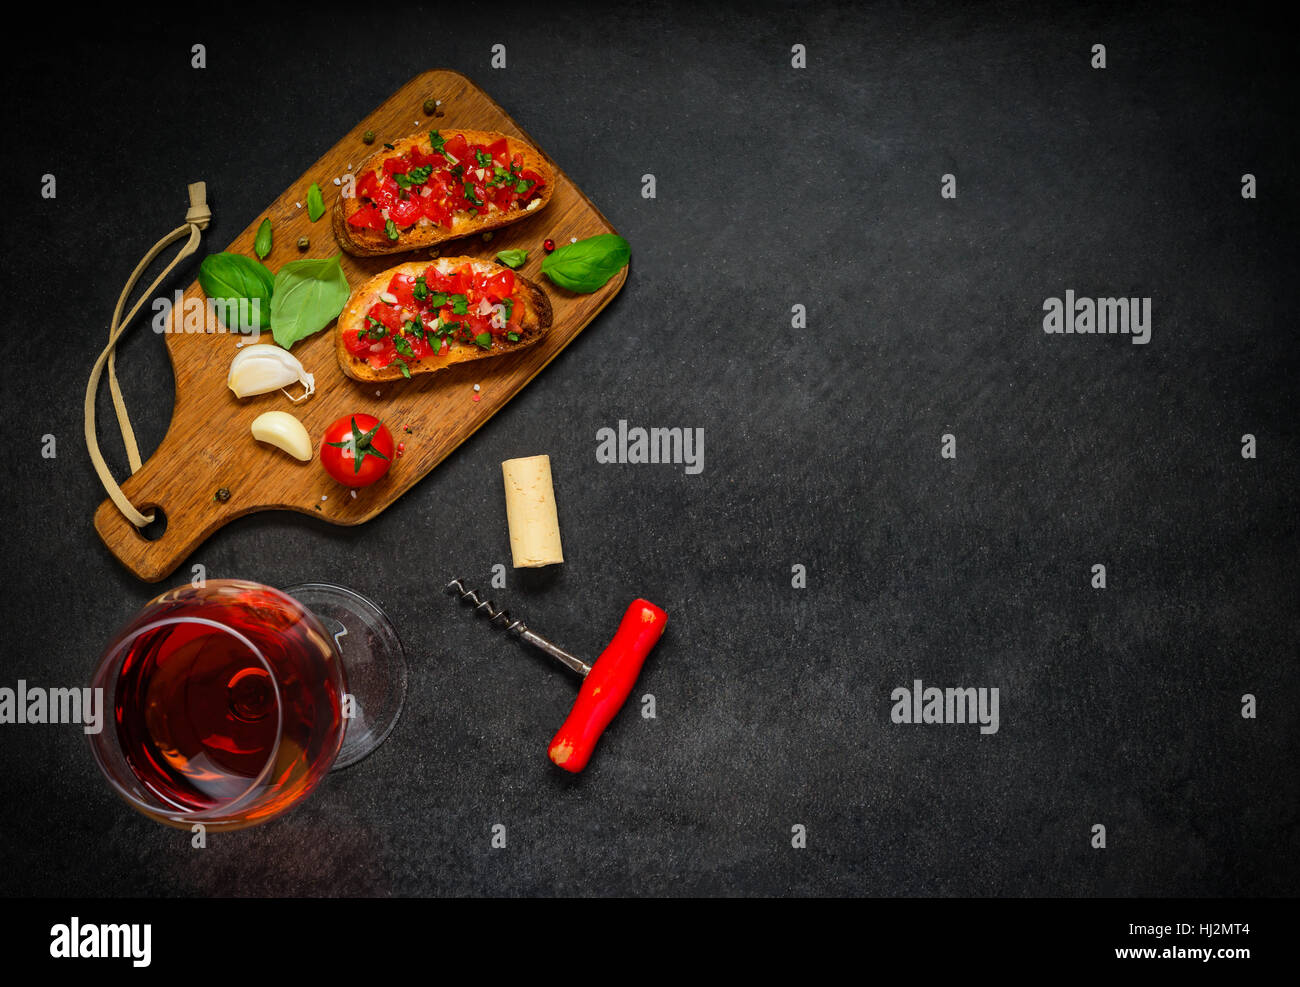 Bruschetta Italian Cuisine Antipasto with Tomato, garlic and basil with Rose Wine on Copy Space Area Stock Photo